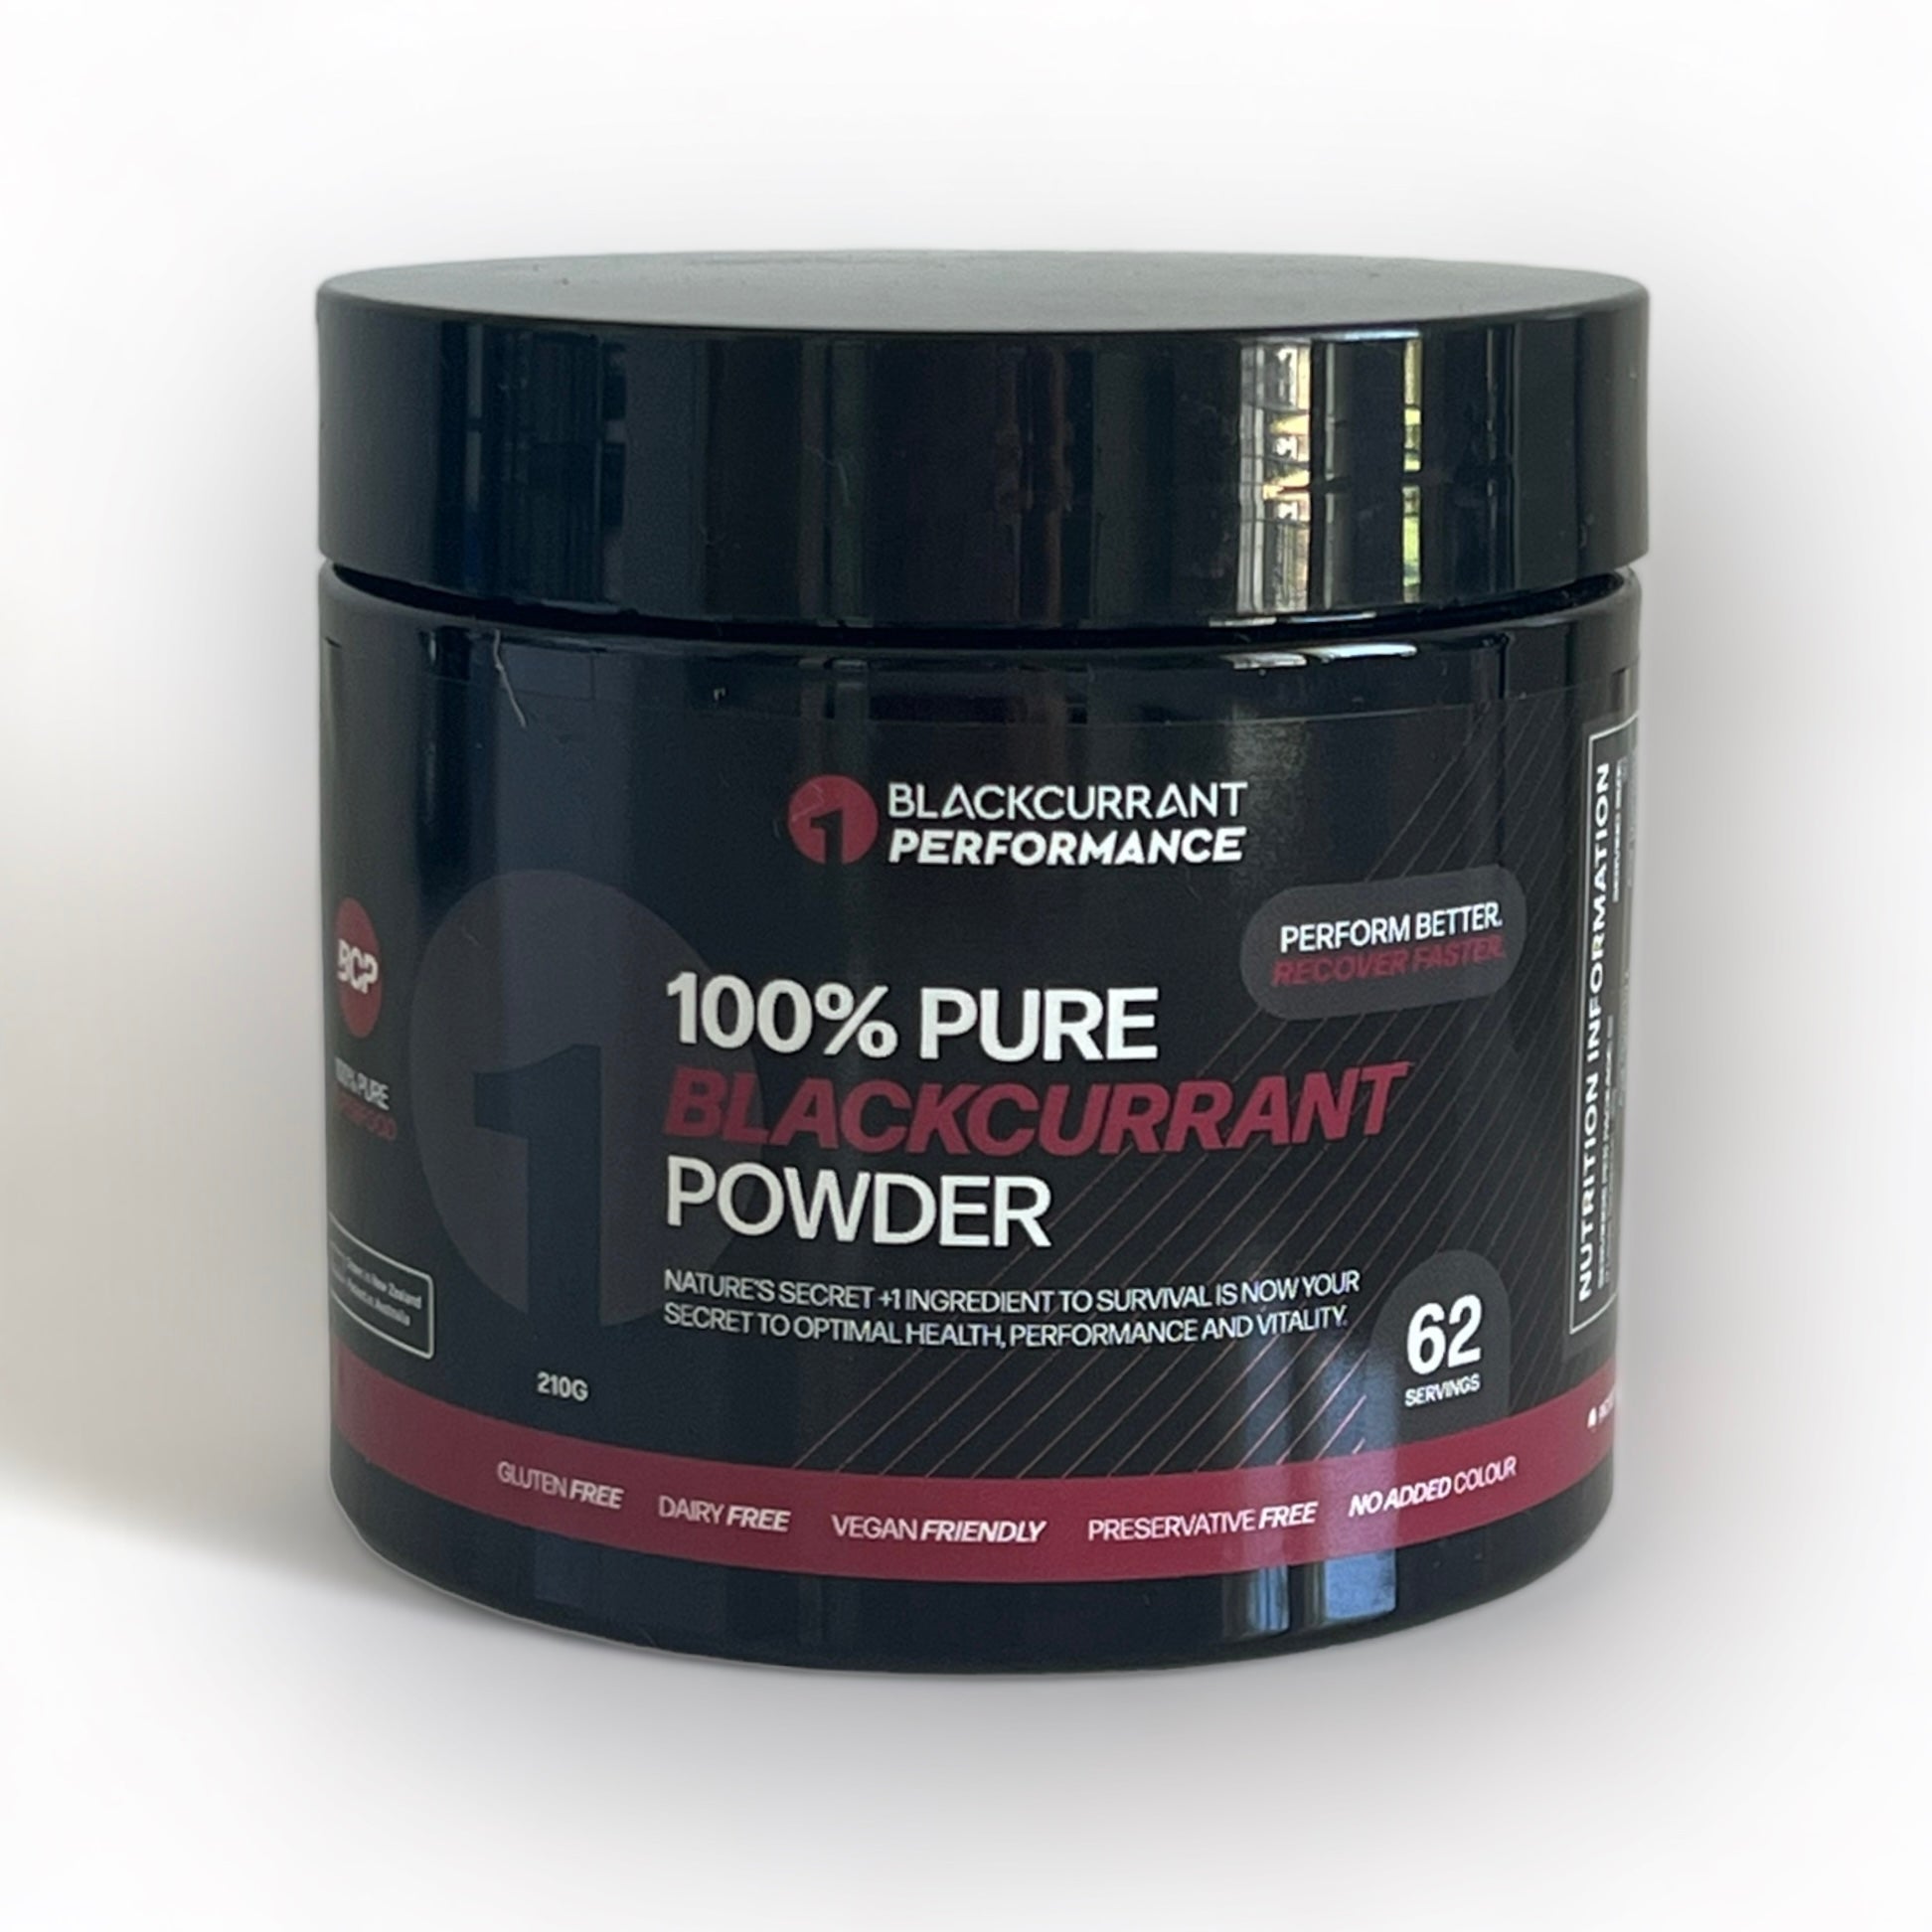 100% PURE BLACKCURRANT POWDER – Blackcurrant Performance